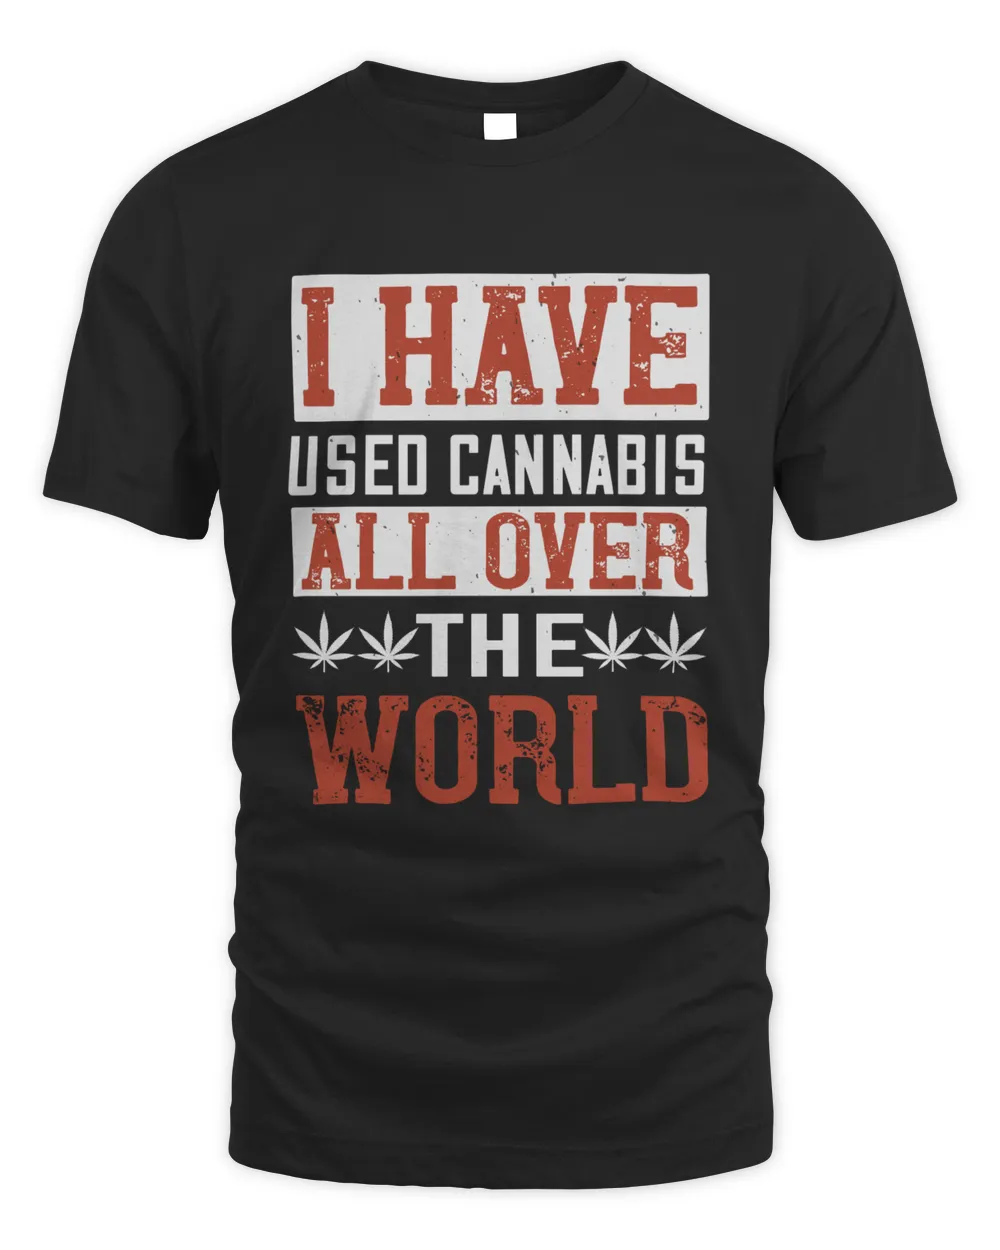 I Have Used Cannabis All Over The World, Funny Weed Shirt - Retro Stoner Tee - Cannabis Shirt - Marijuana Tee - 420 Shirt - Gift For Stoner!